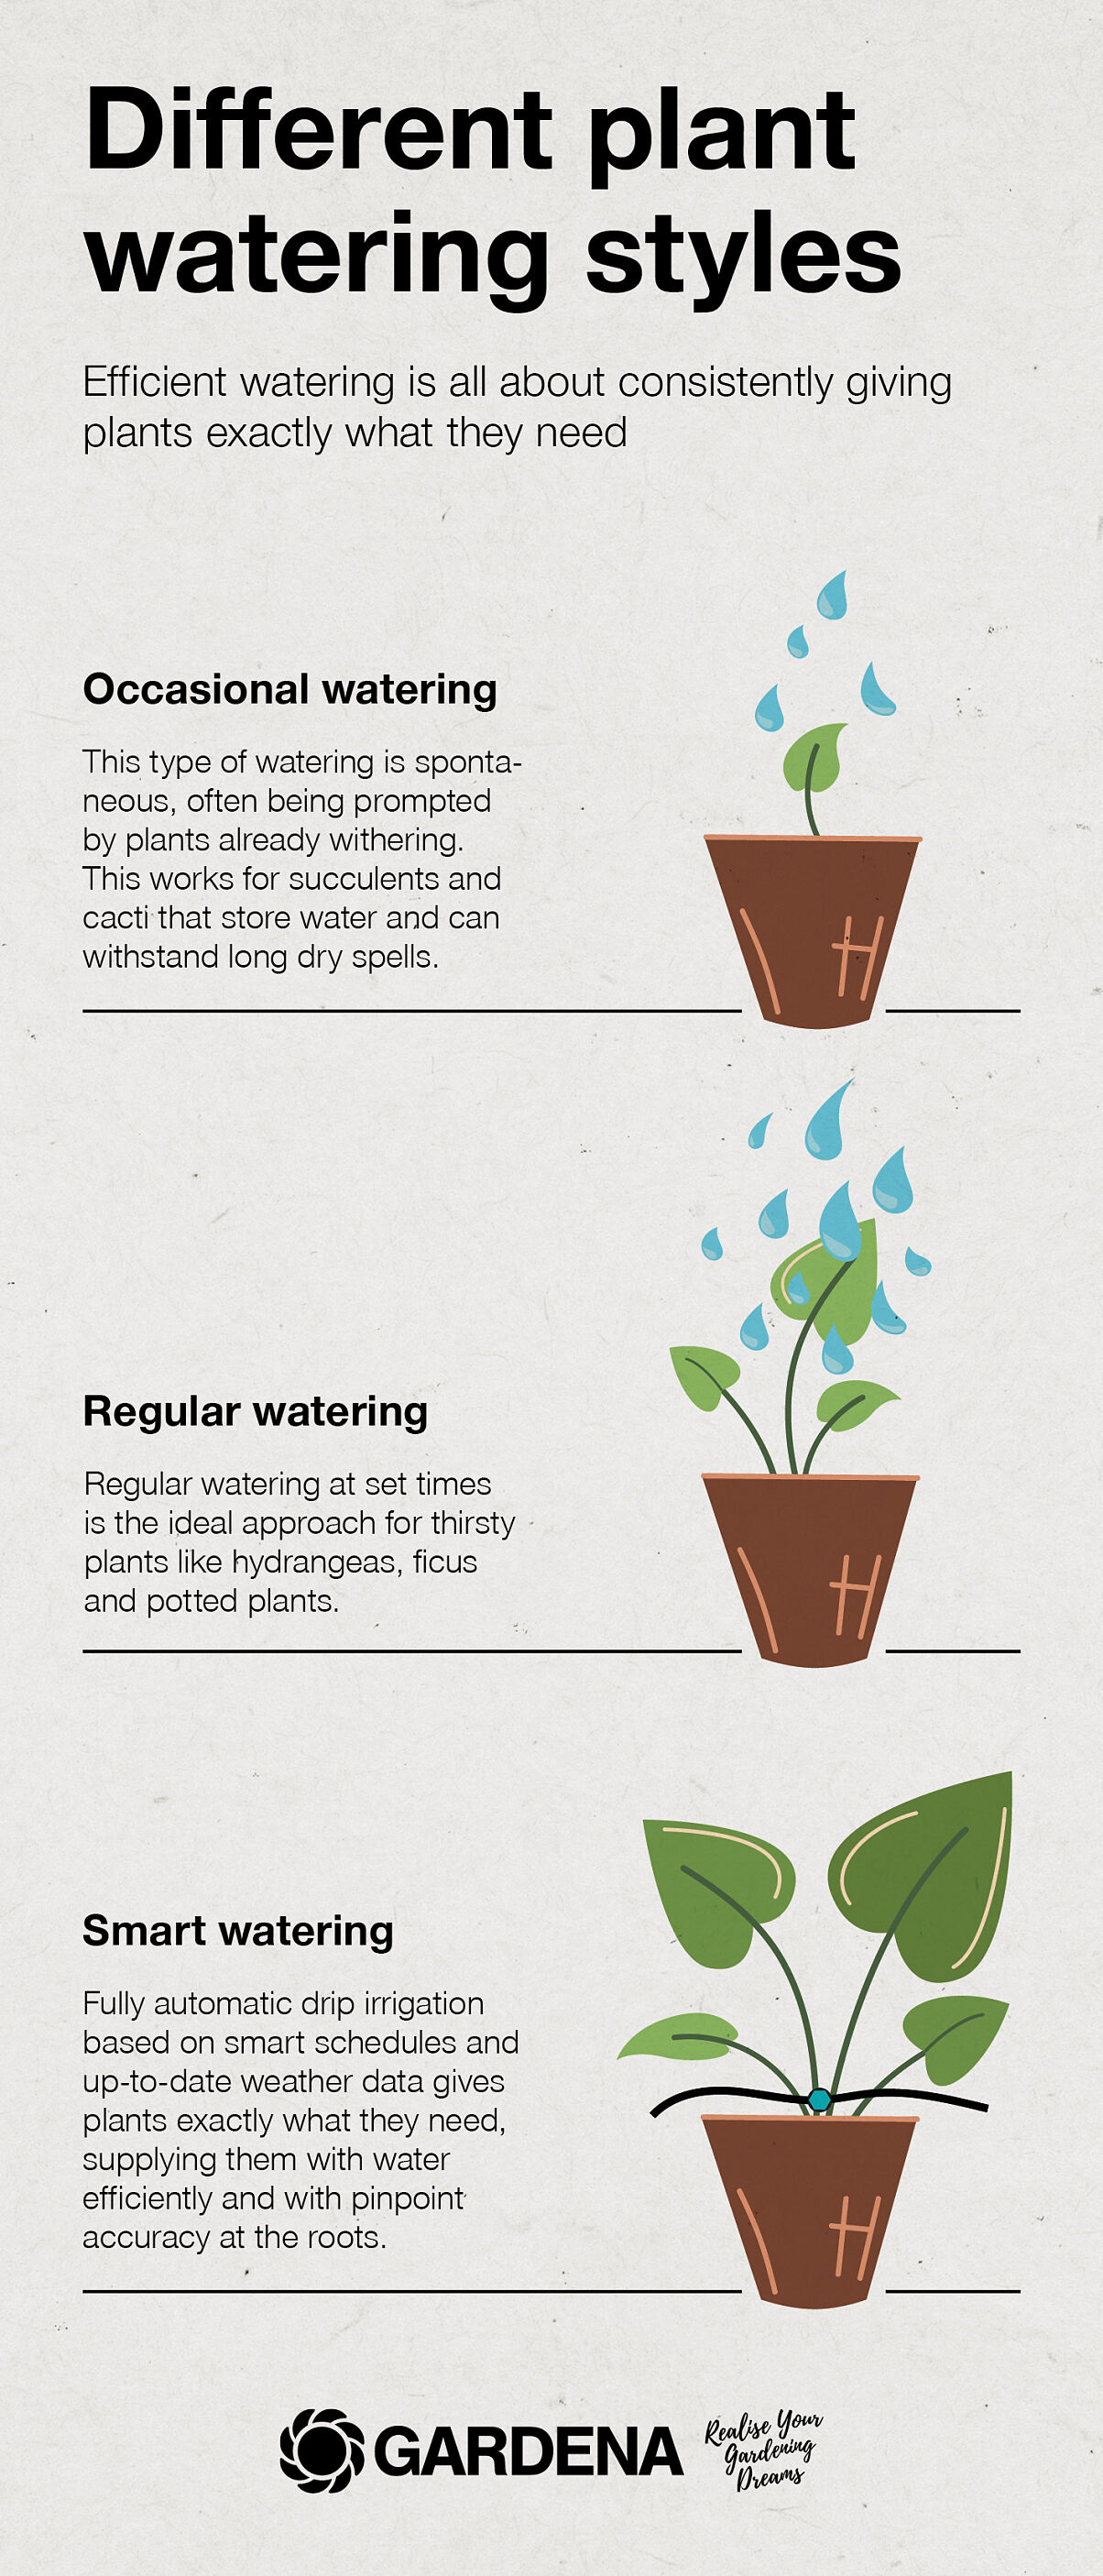 Infosheet on different types of irrigation